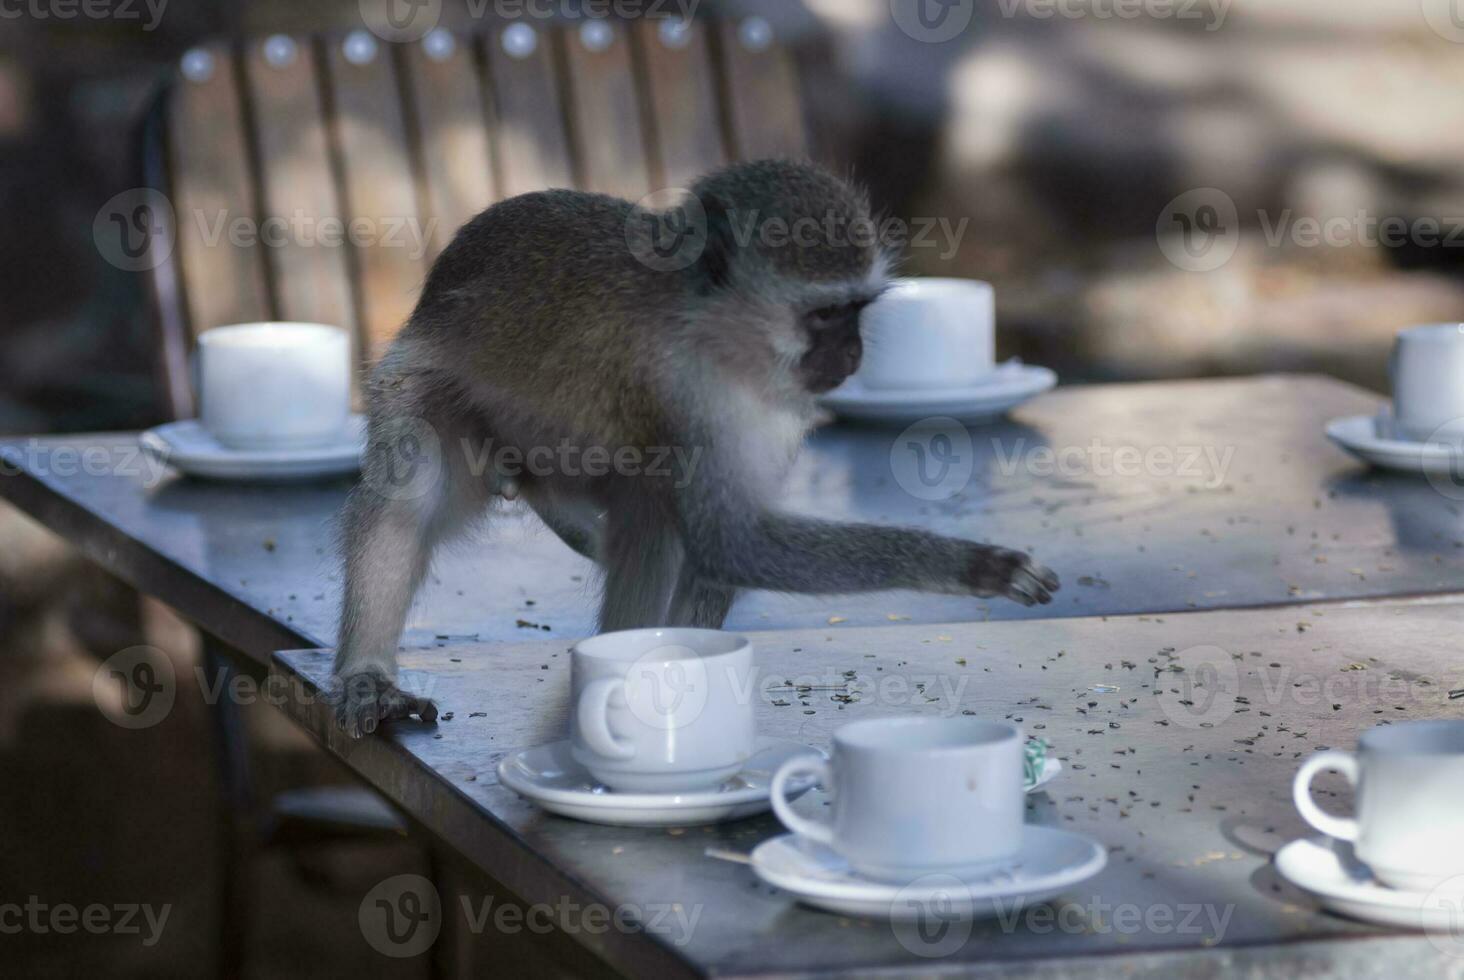 vervet scimmia, kruger nazionale parco, sud Africa foto